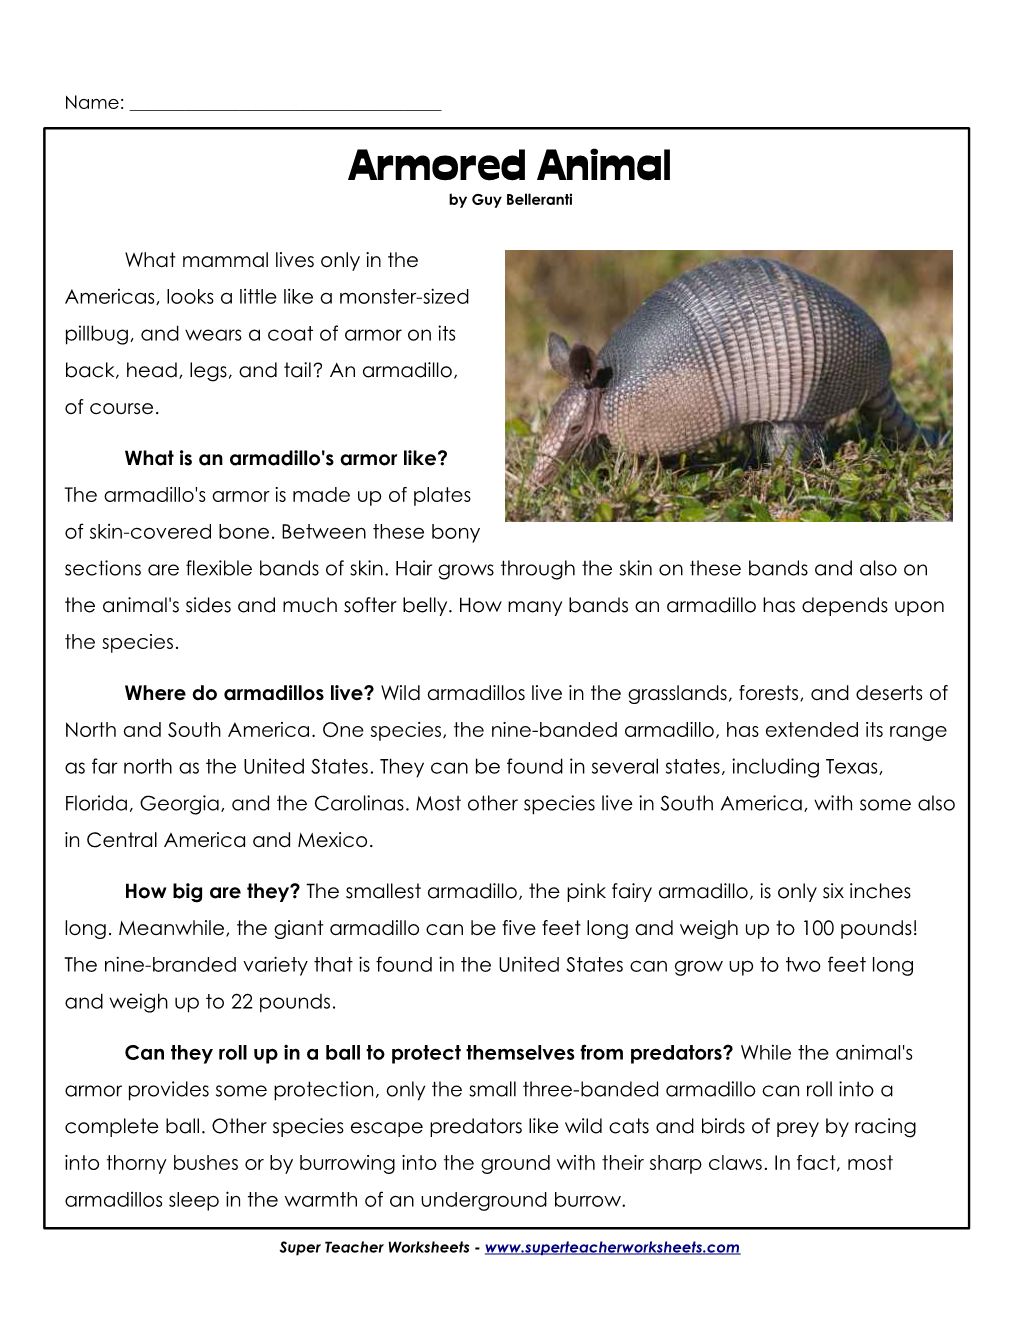 Armored Animal by Guy Belleranti